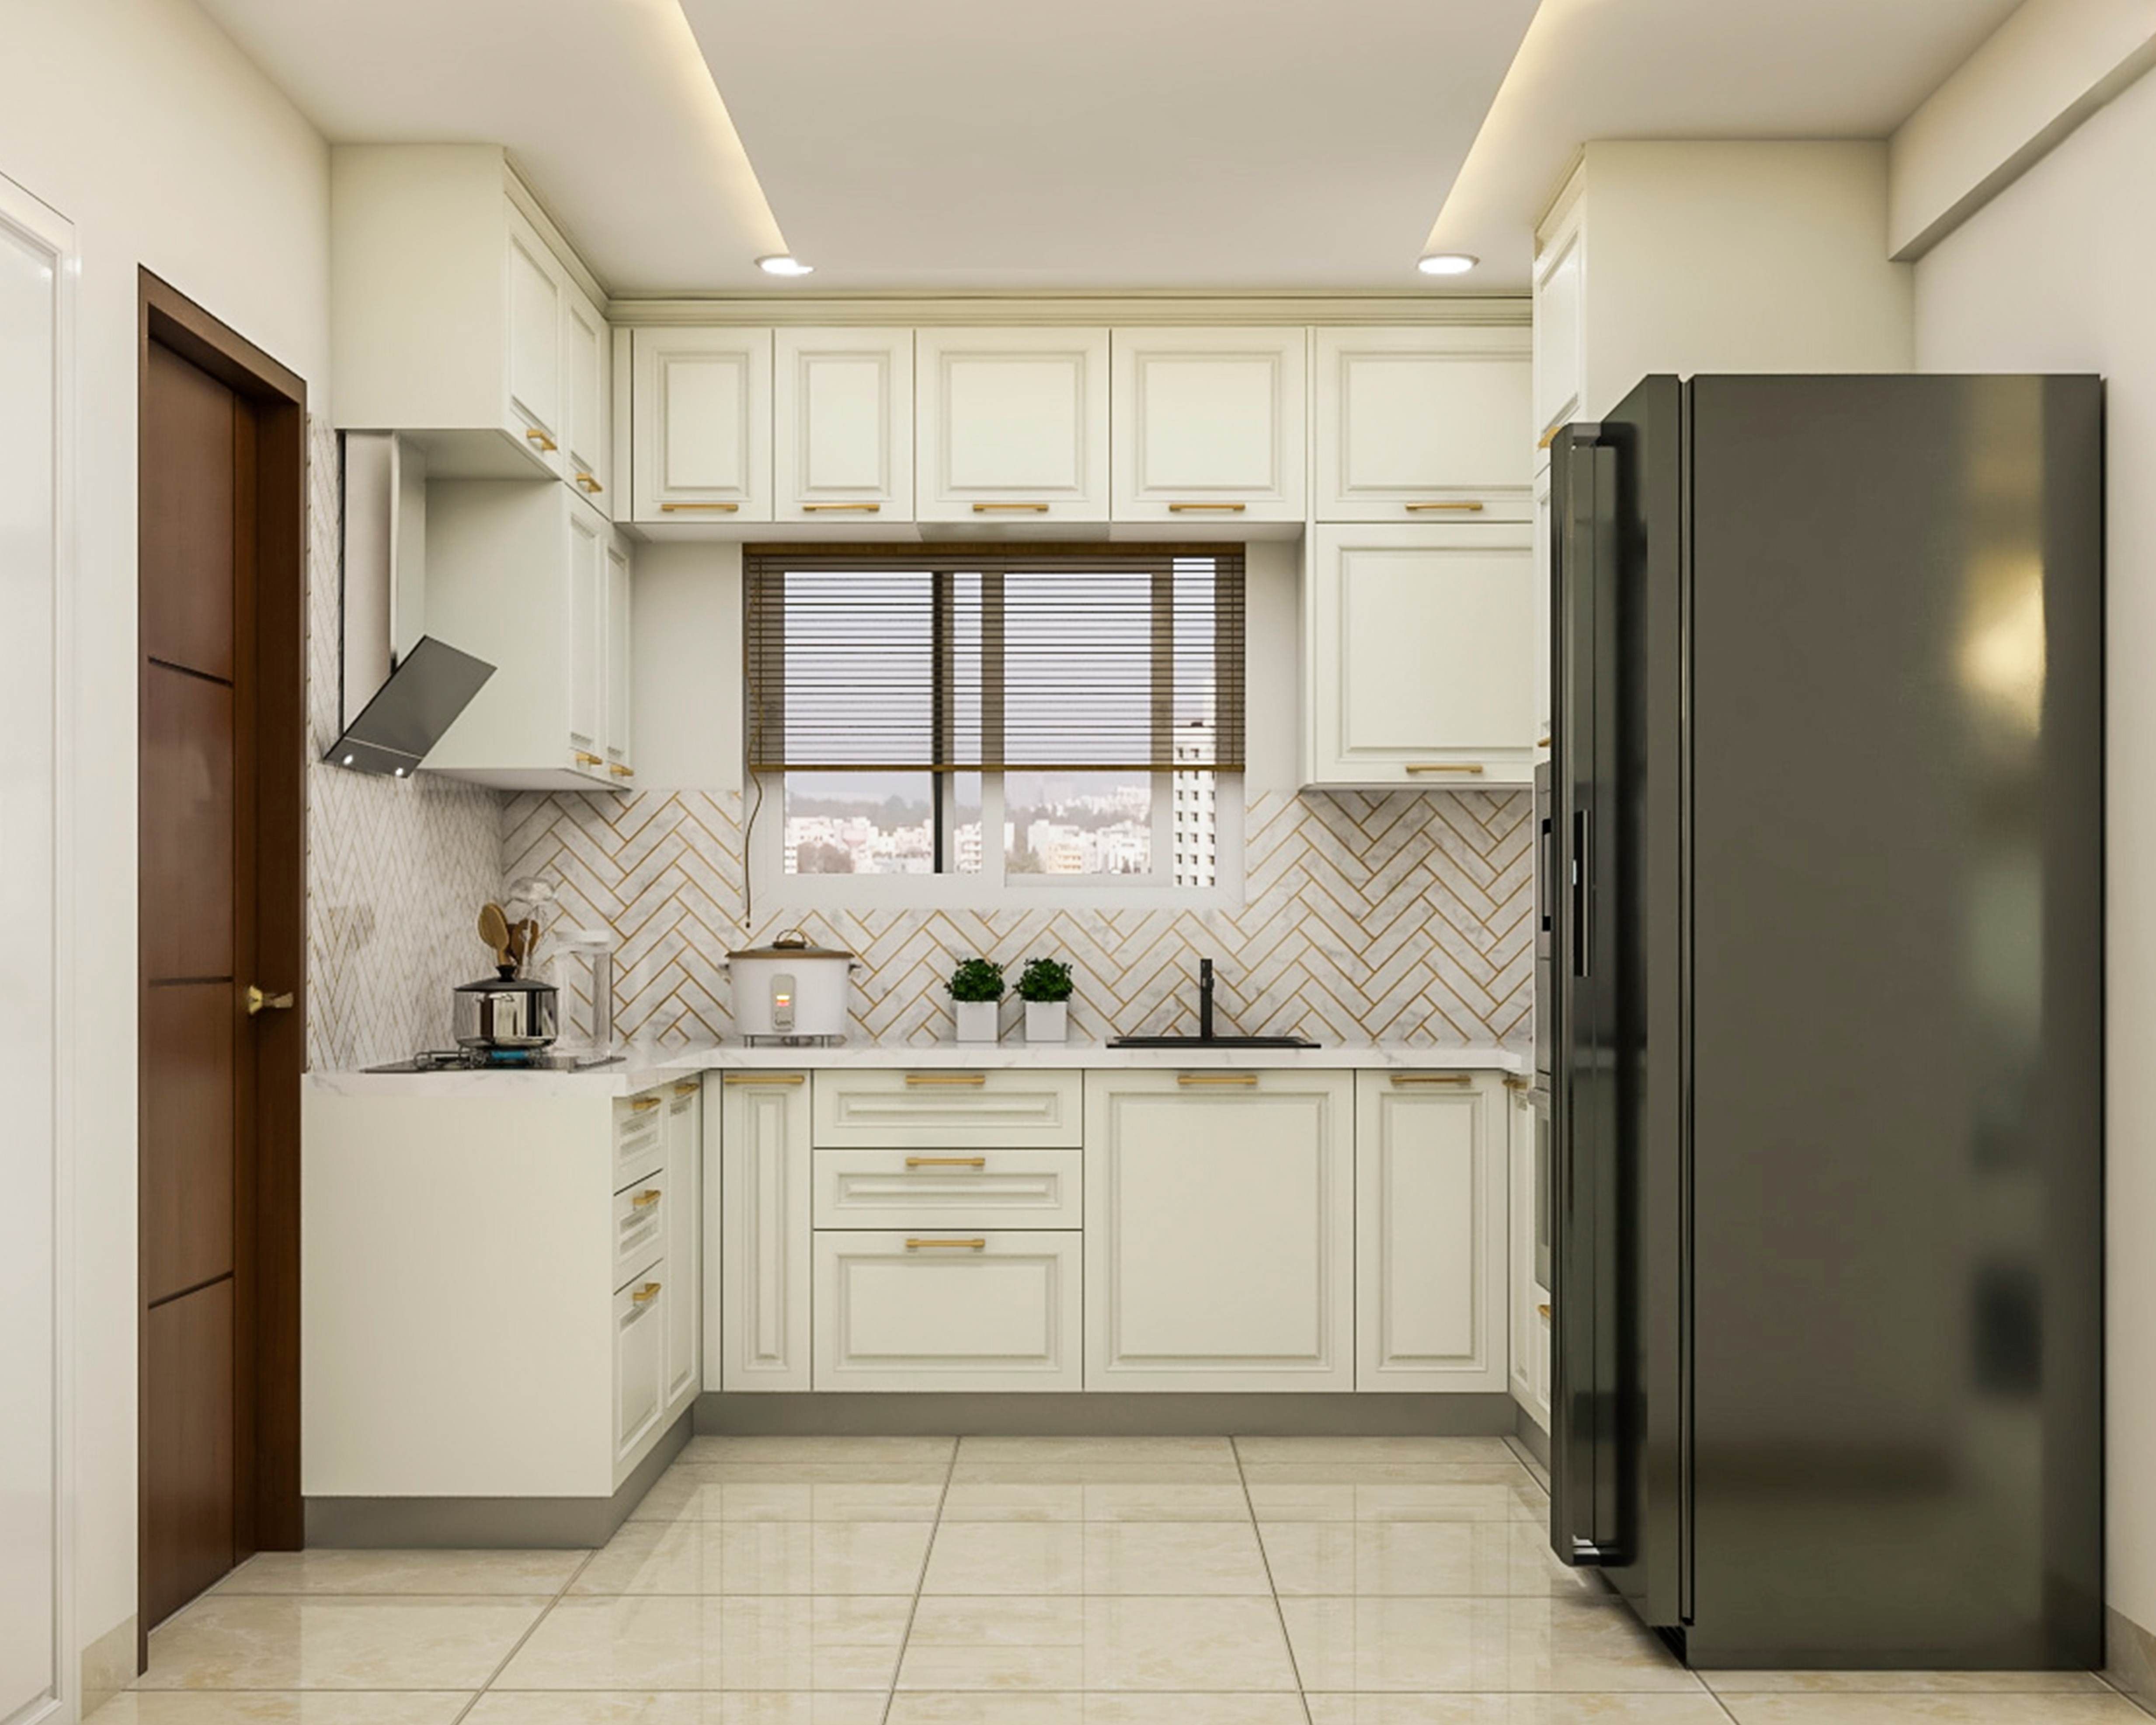 Classic Kitchen Design With Spacious White Kitchen Cabinet Designs